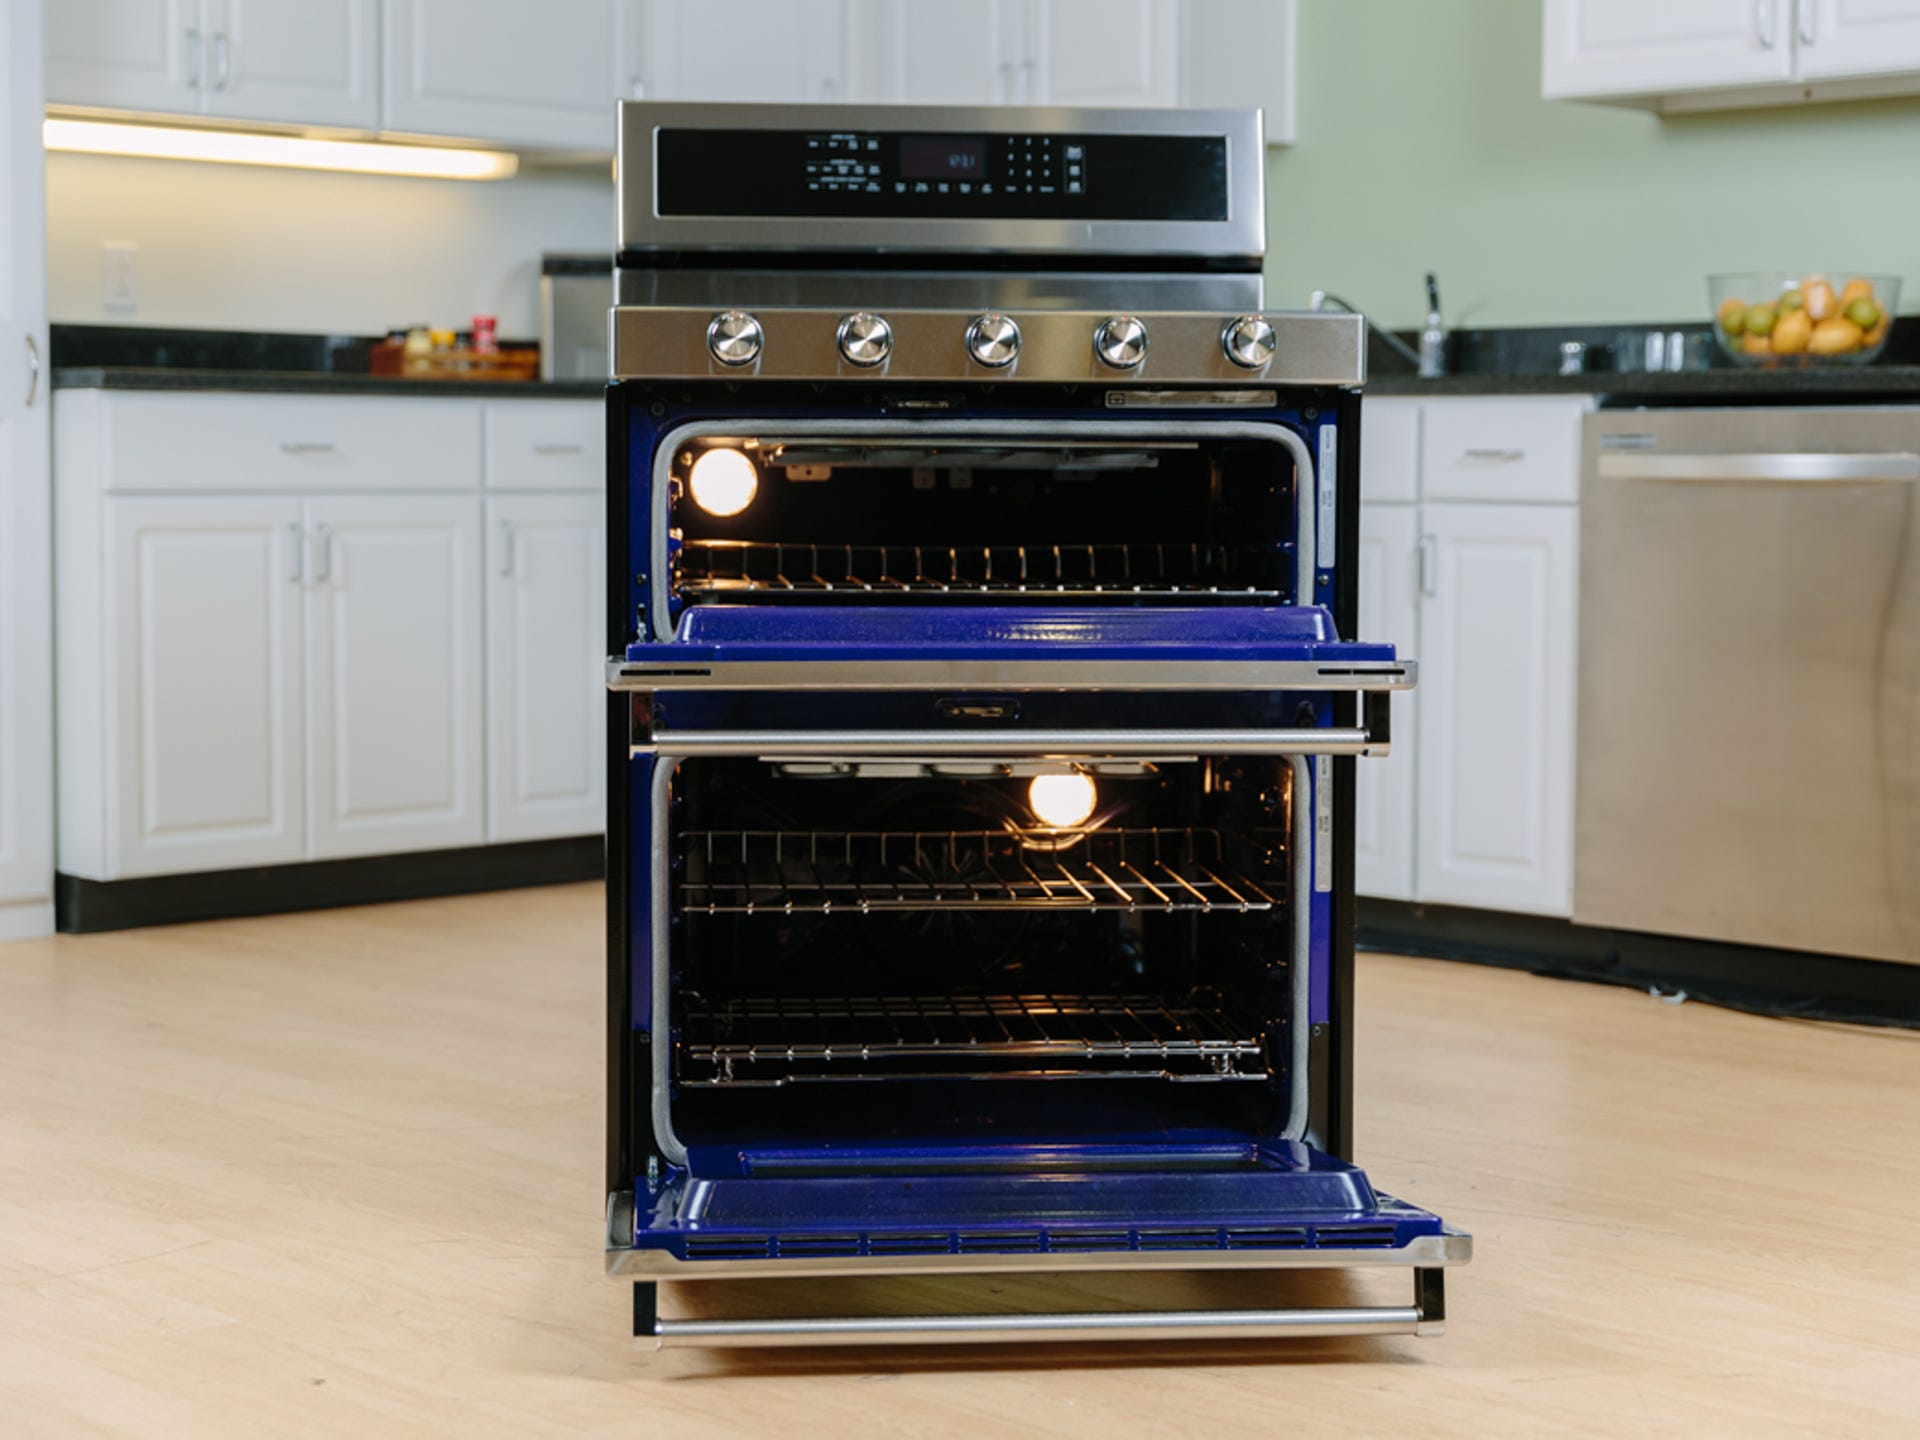 kitchenaid-kfdd50ess-double-oven-range-product-photos-1.jpg